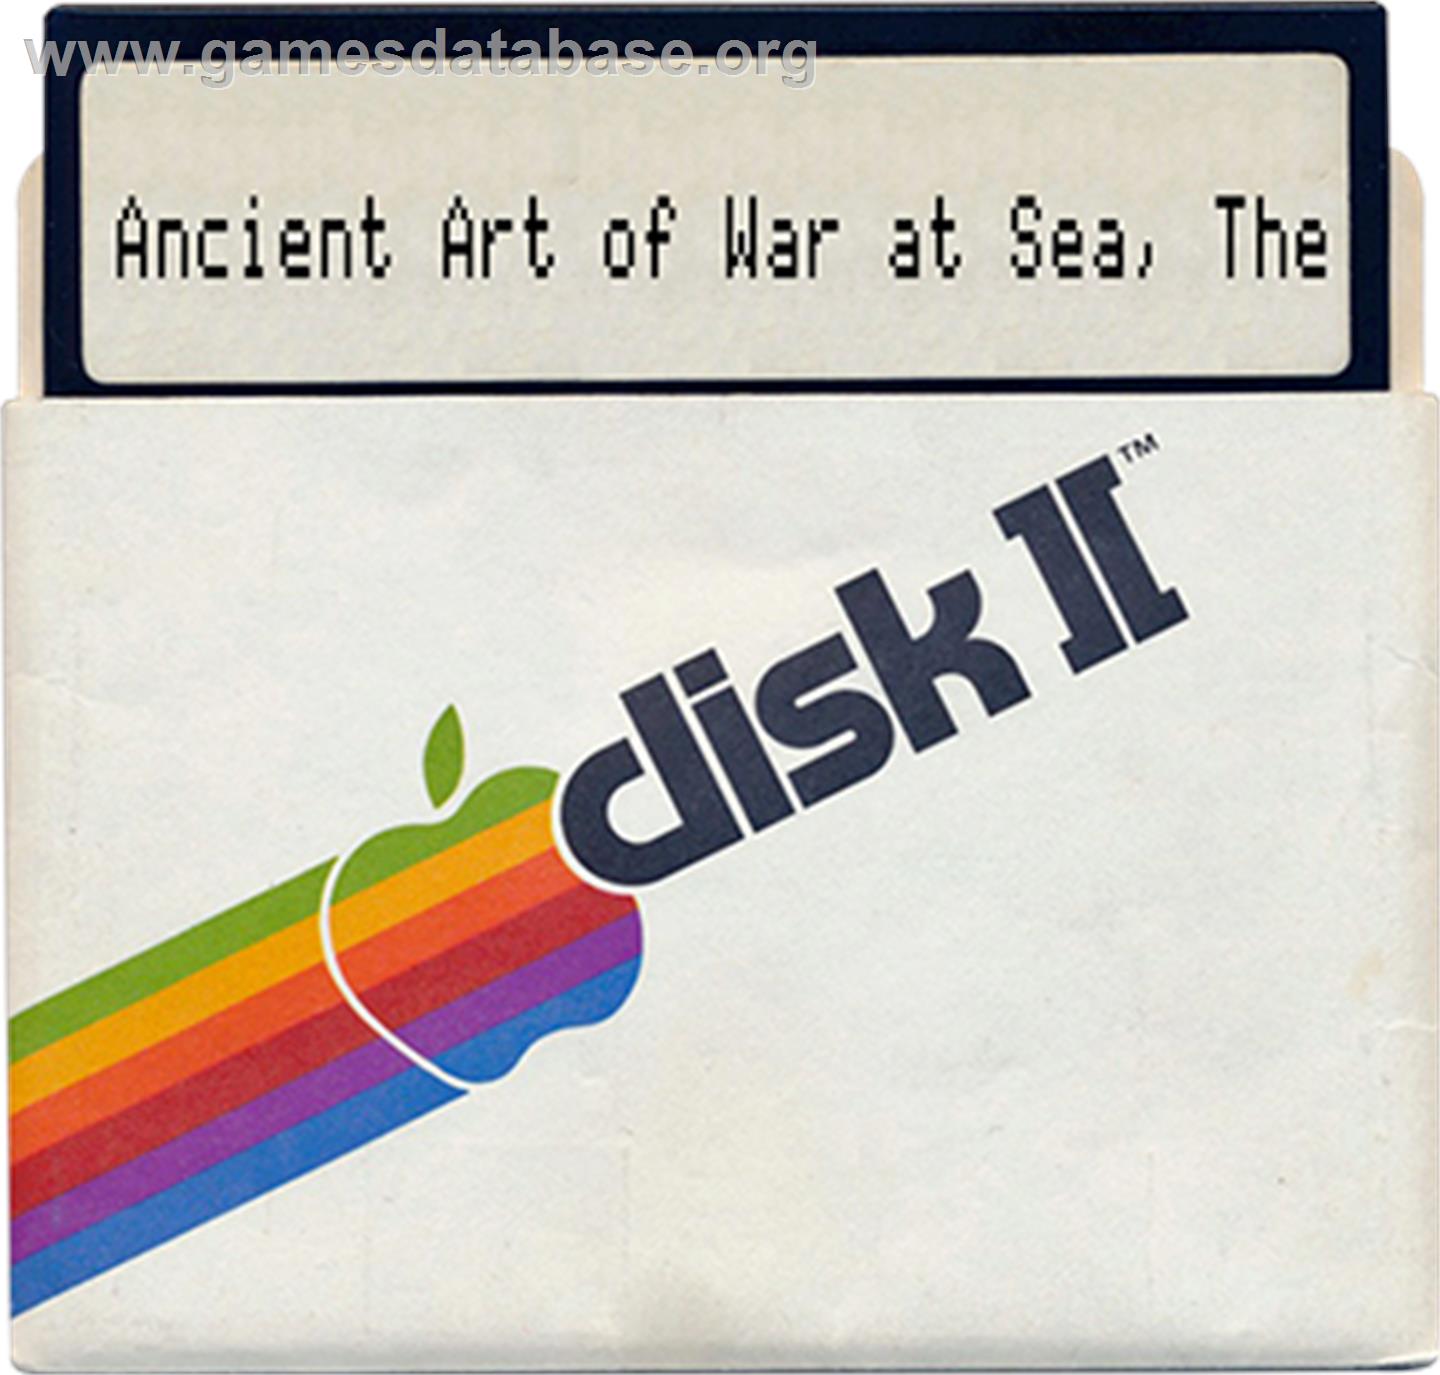 Ancient Art of War at Sea - Apple II - Artwork - Disc